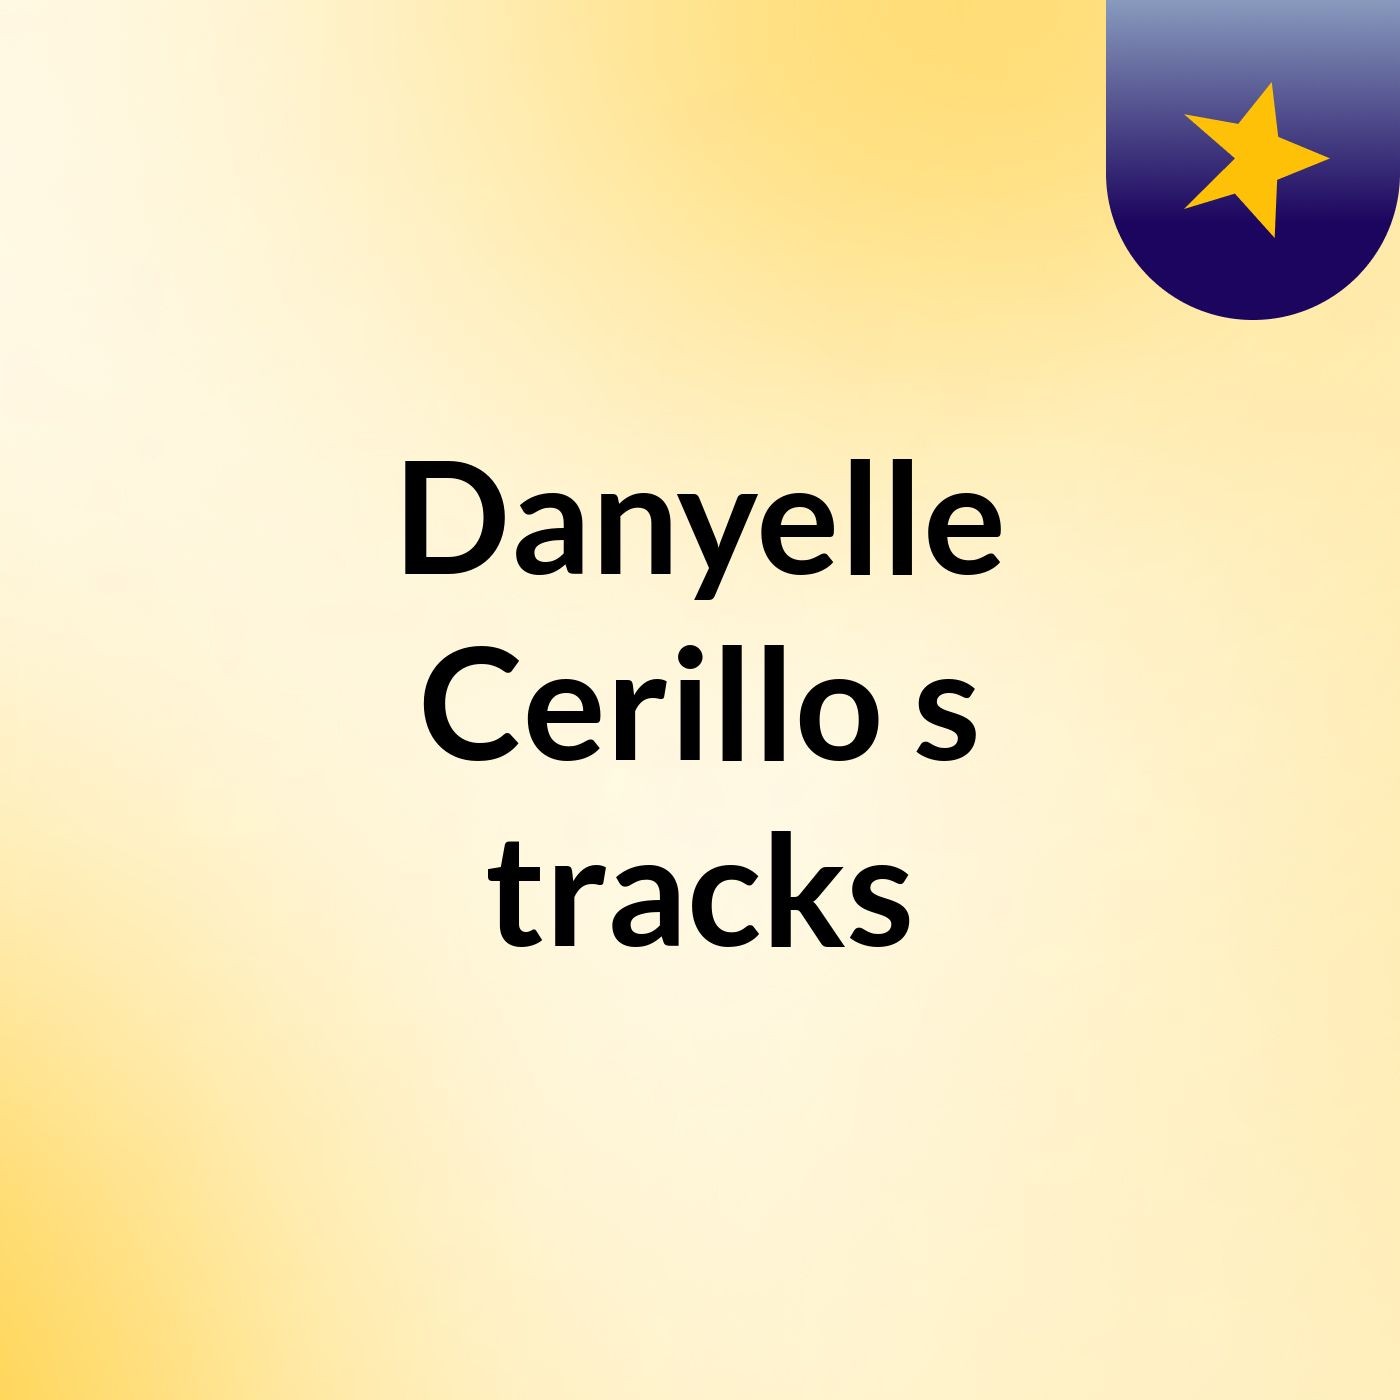 Danyelle Cerillo's tracks